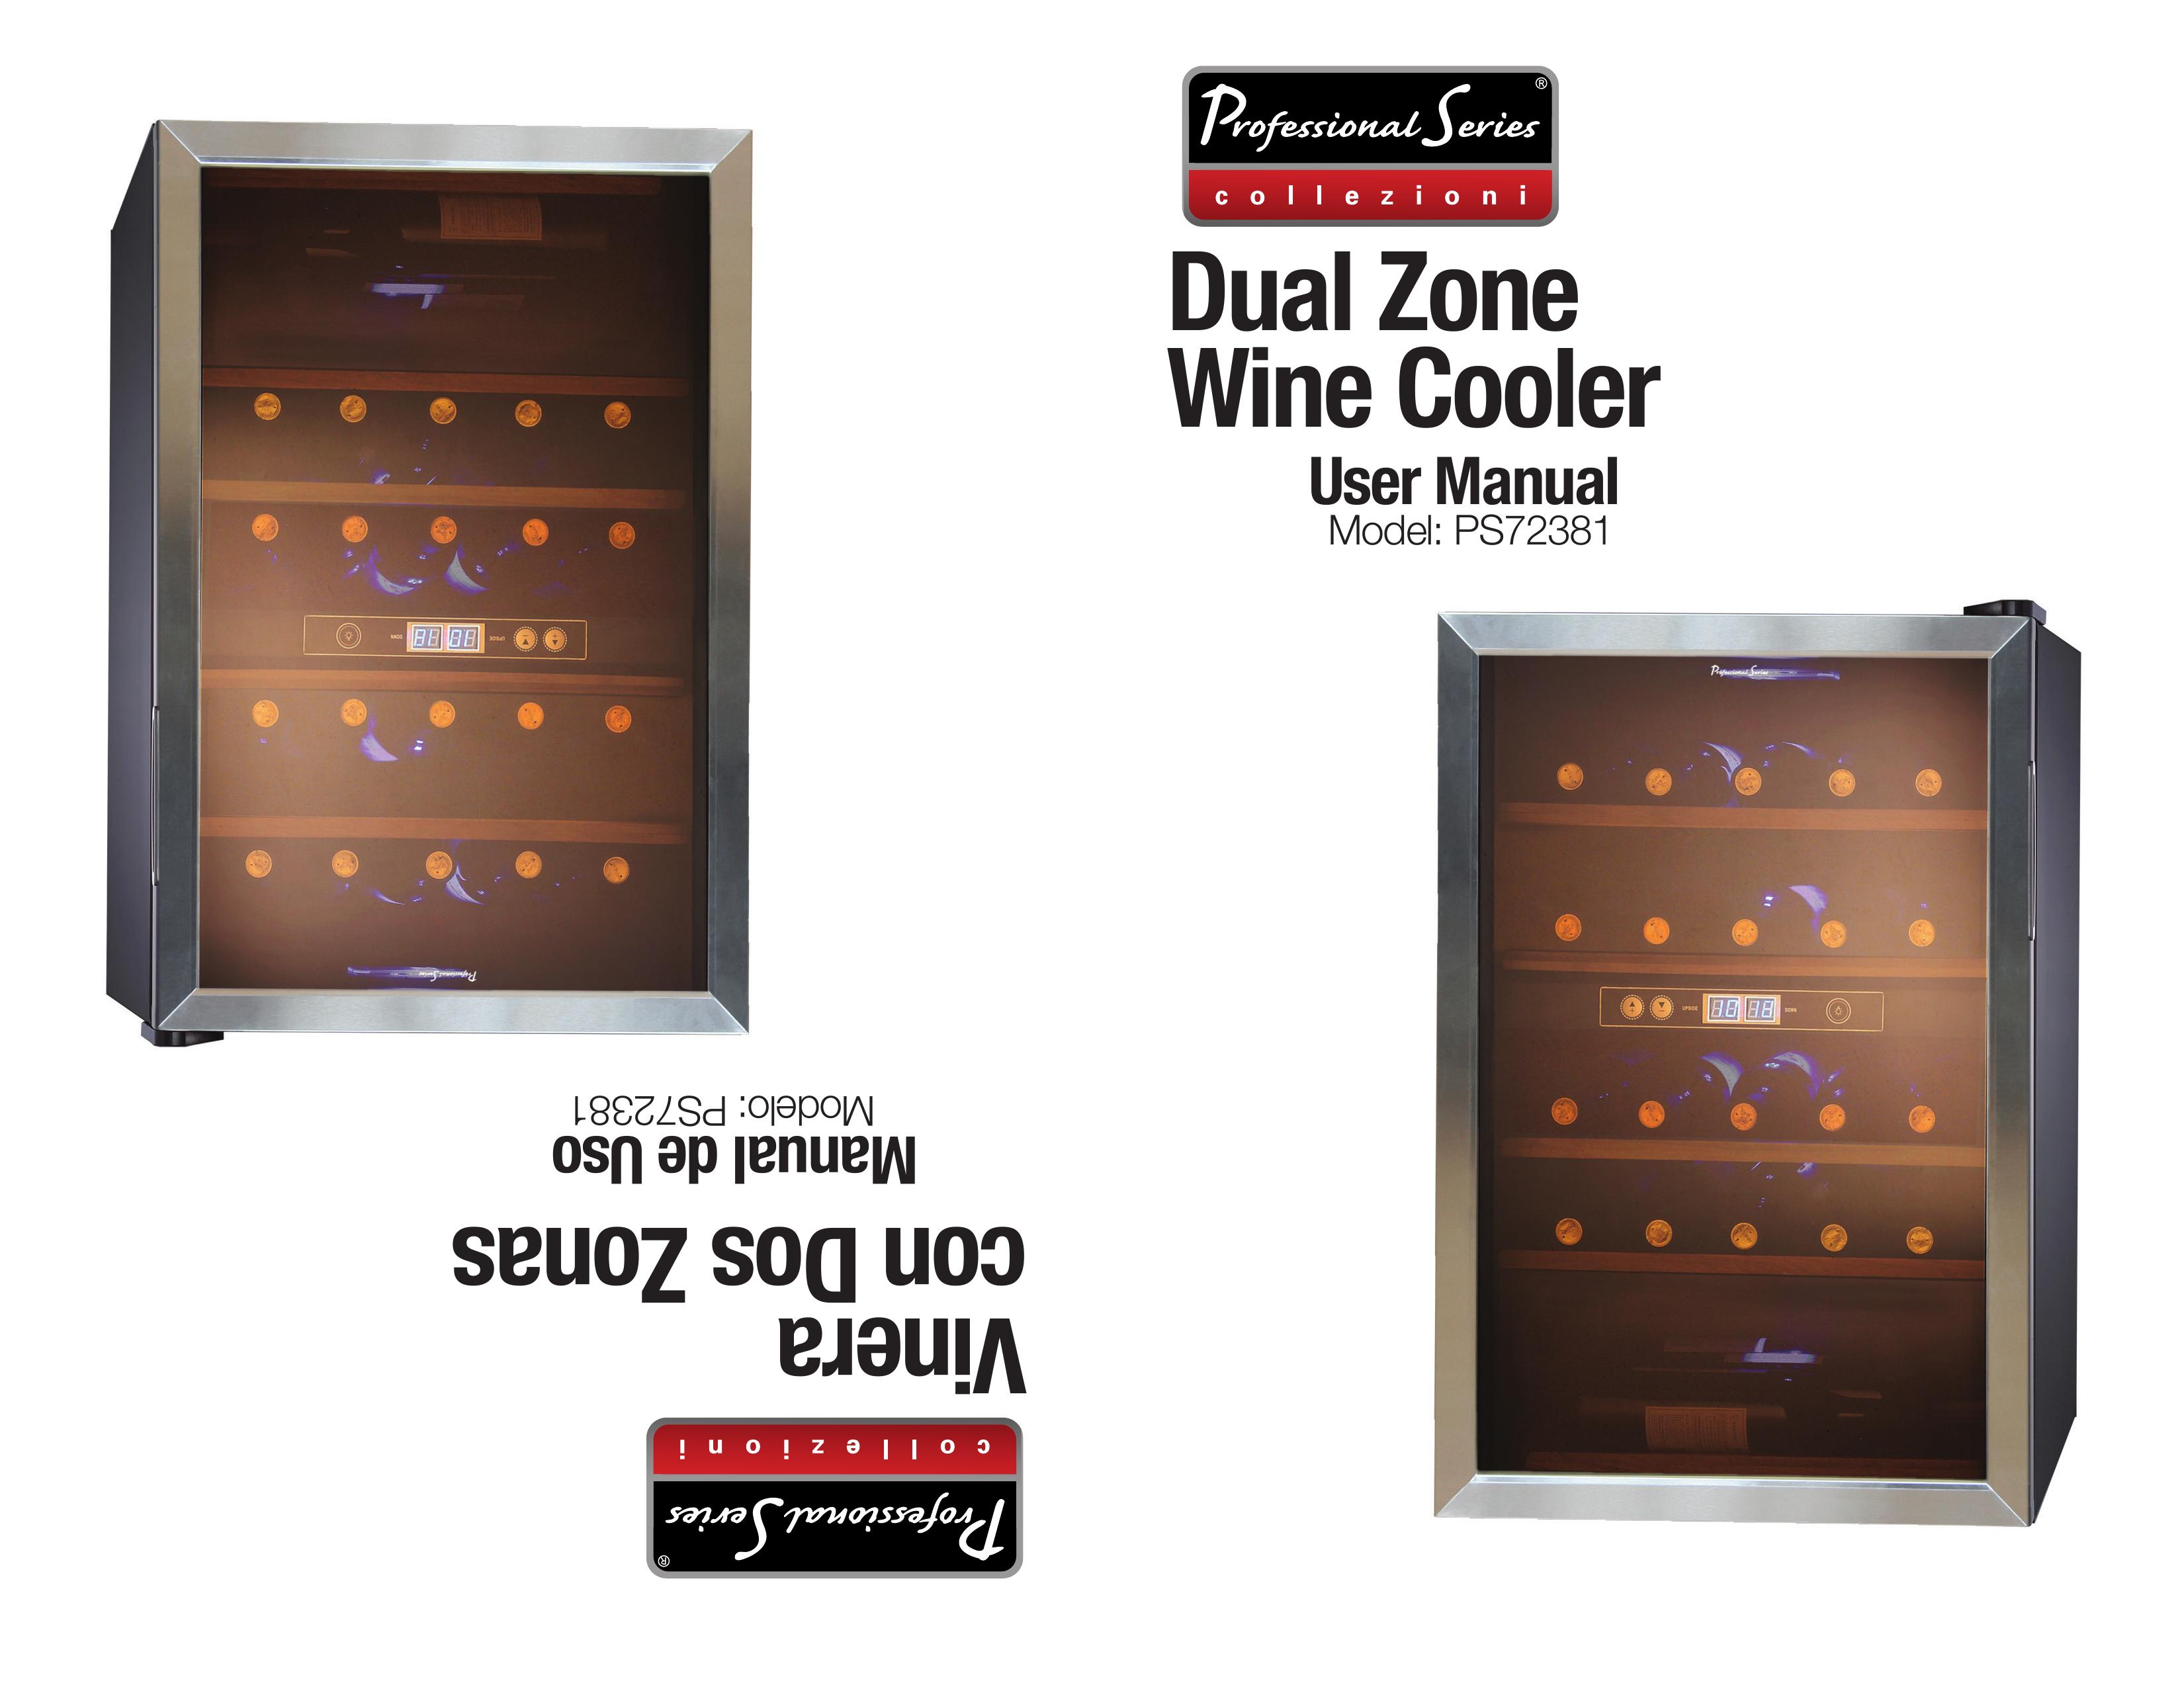 Professional Series PS72381 Refrigerator User Manual